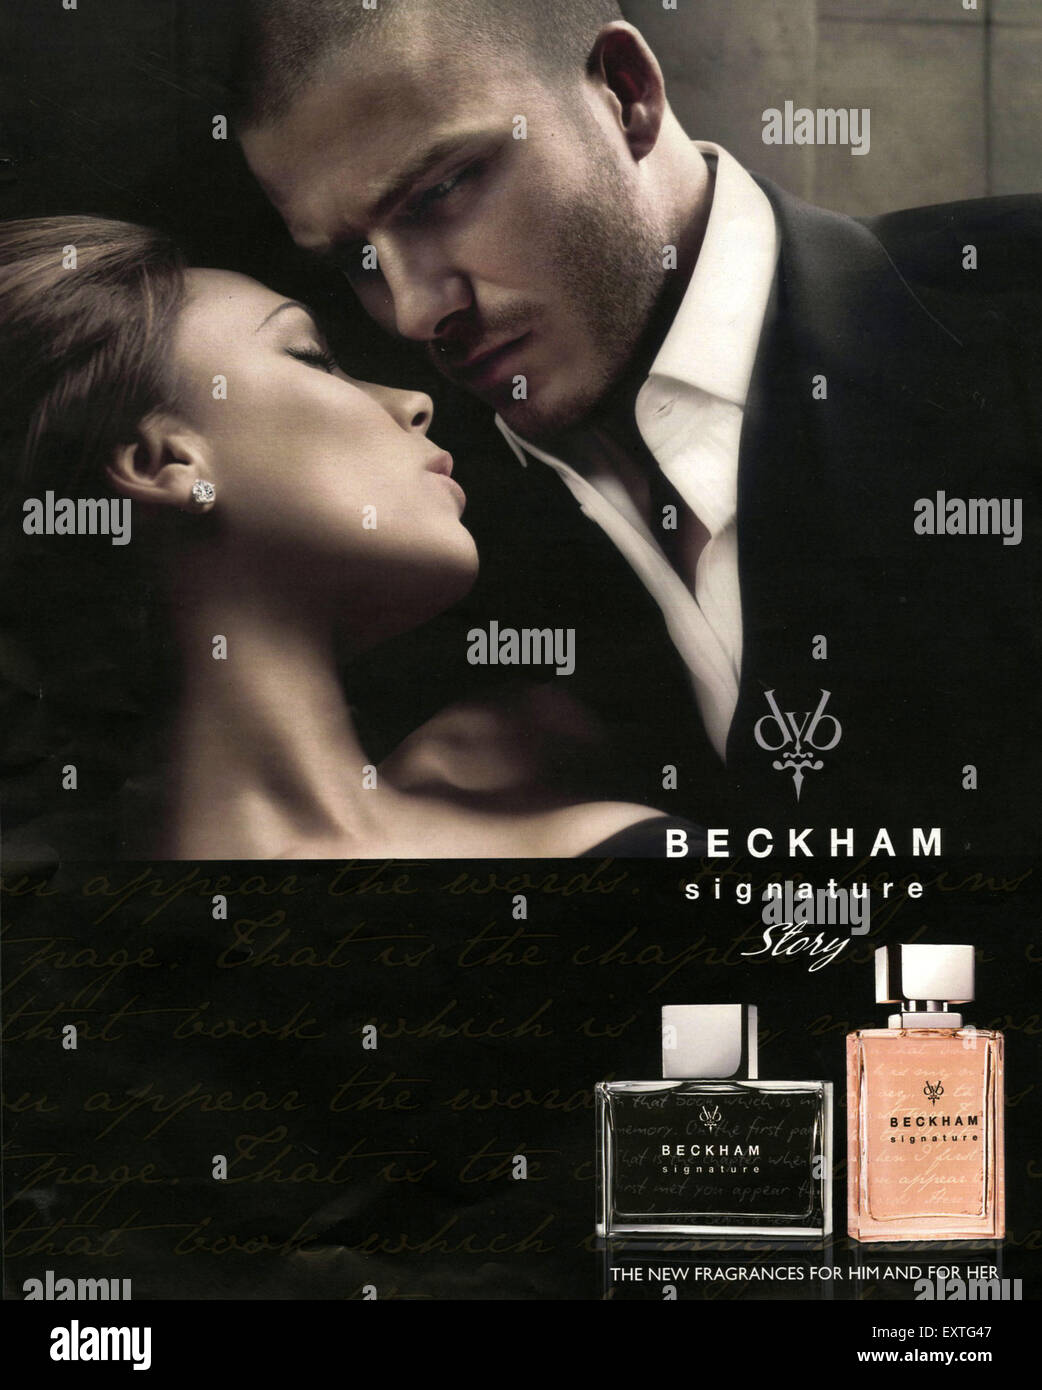 2000s UK Beckham Magazine Advert Stock Photo